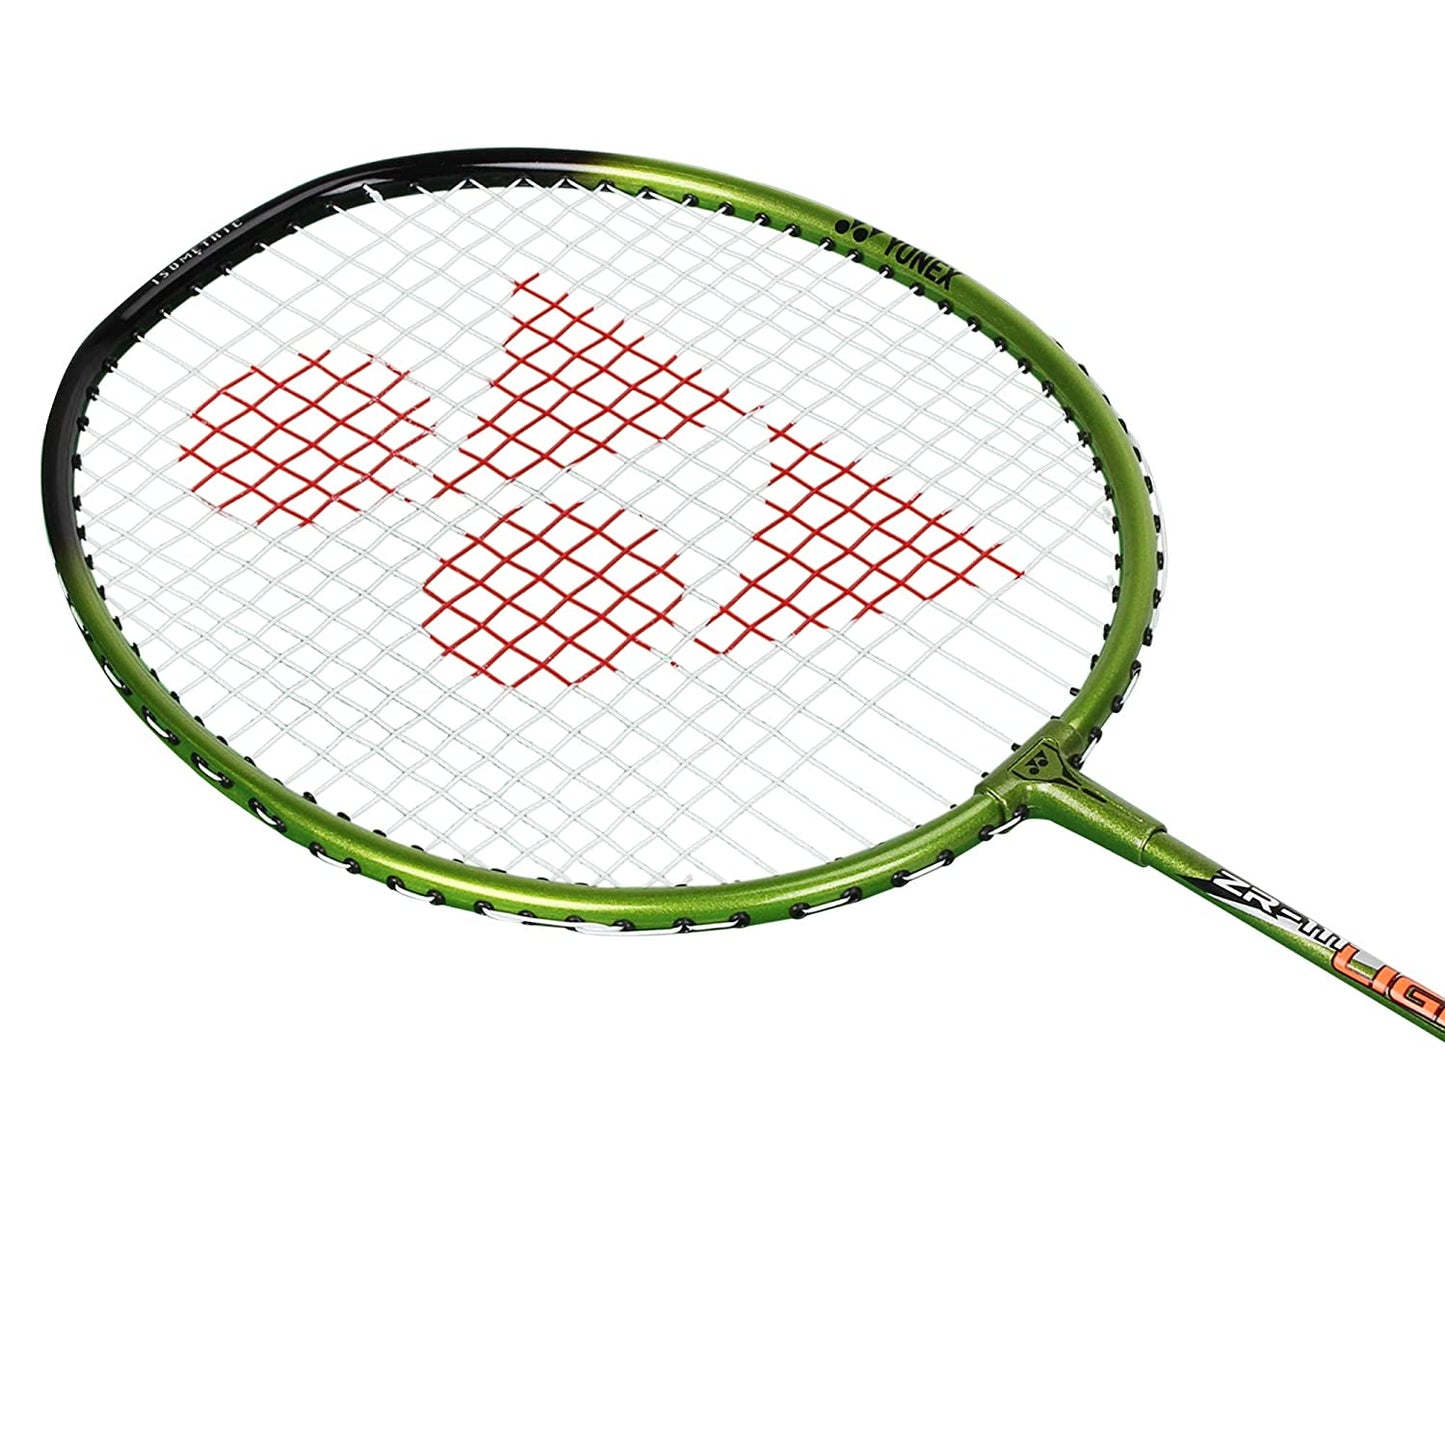 Yonex ZR 111 Light Aluminium Badminton Racquet with Full Cover, Lime - Best Price online Prokicksports.com